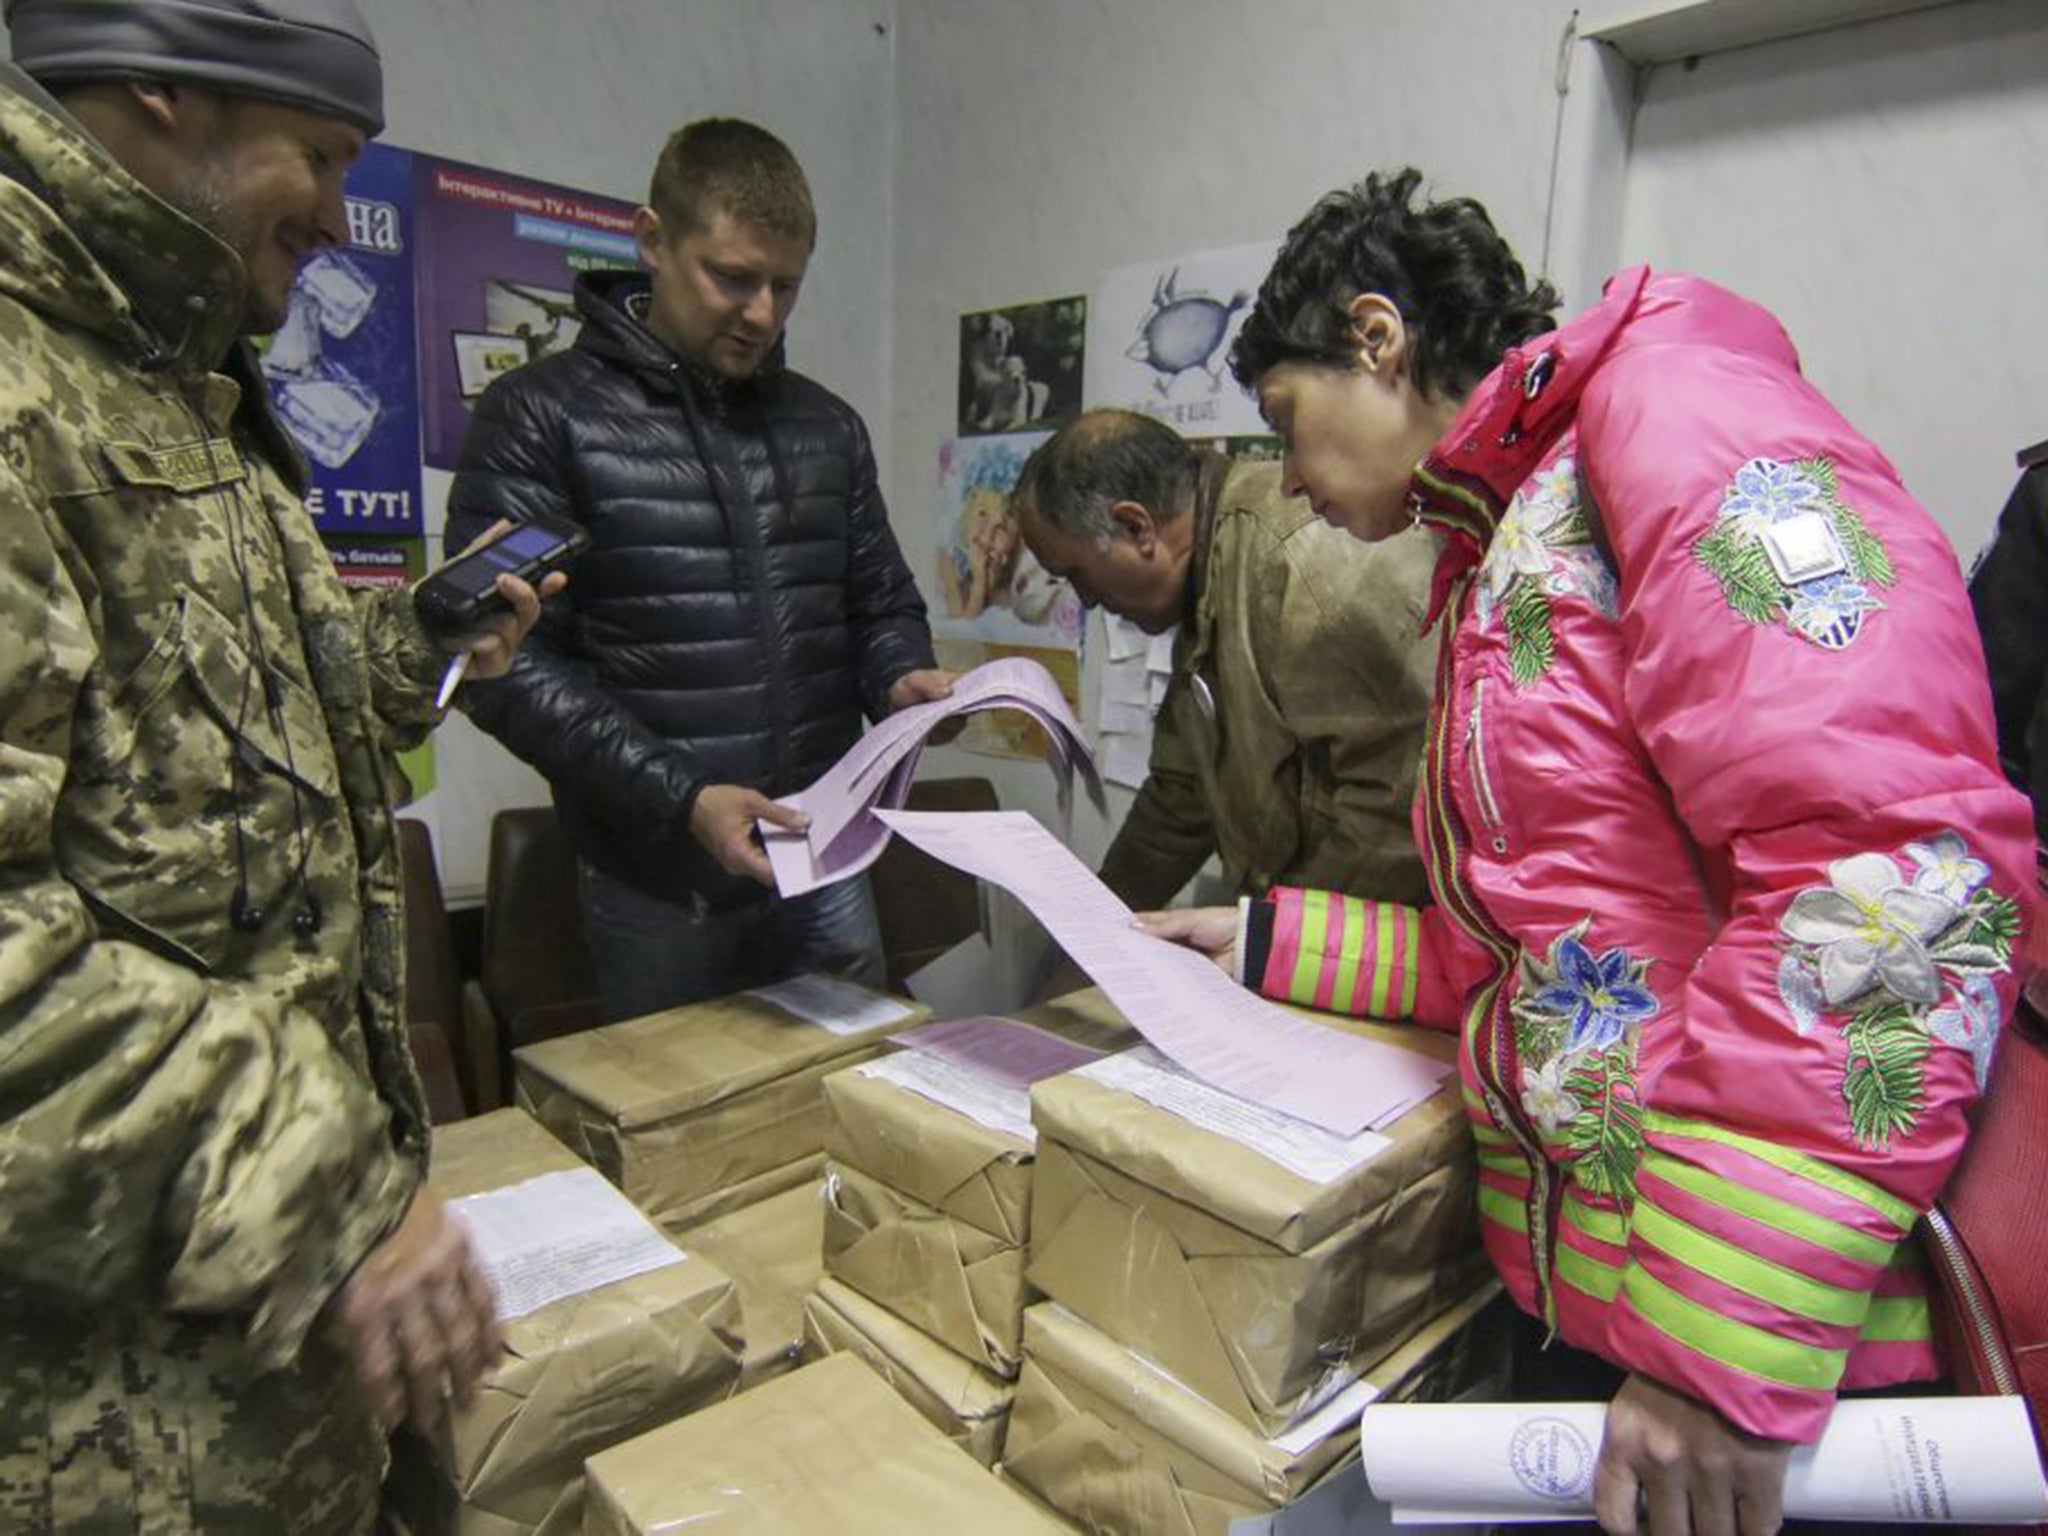 Mariupol activists check ballots at the plant owned by Rinat Akhmetov